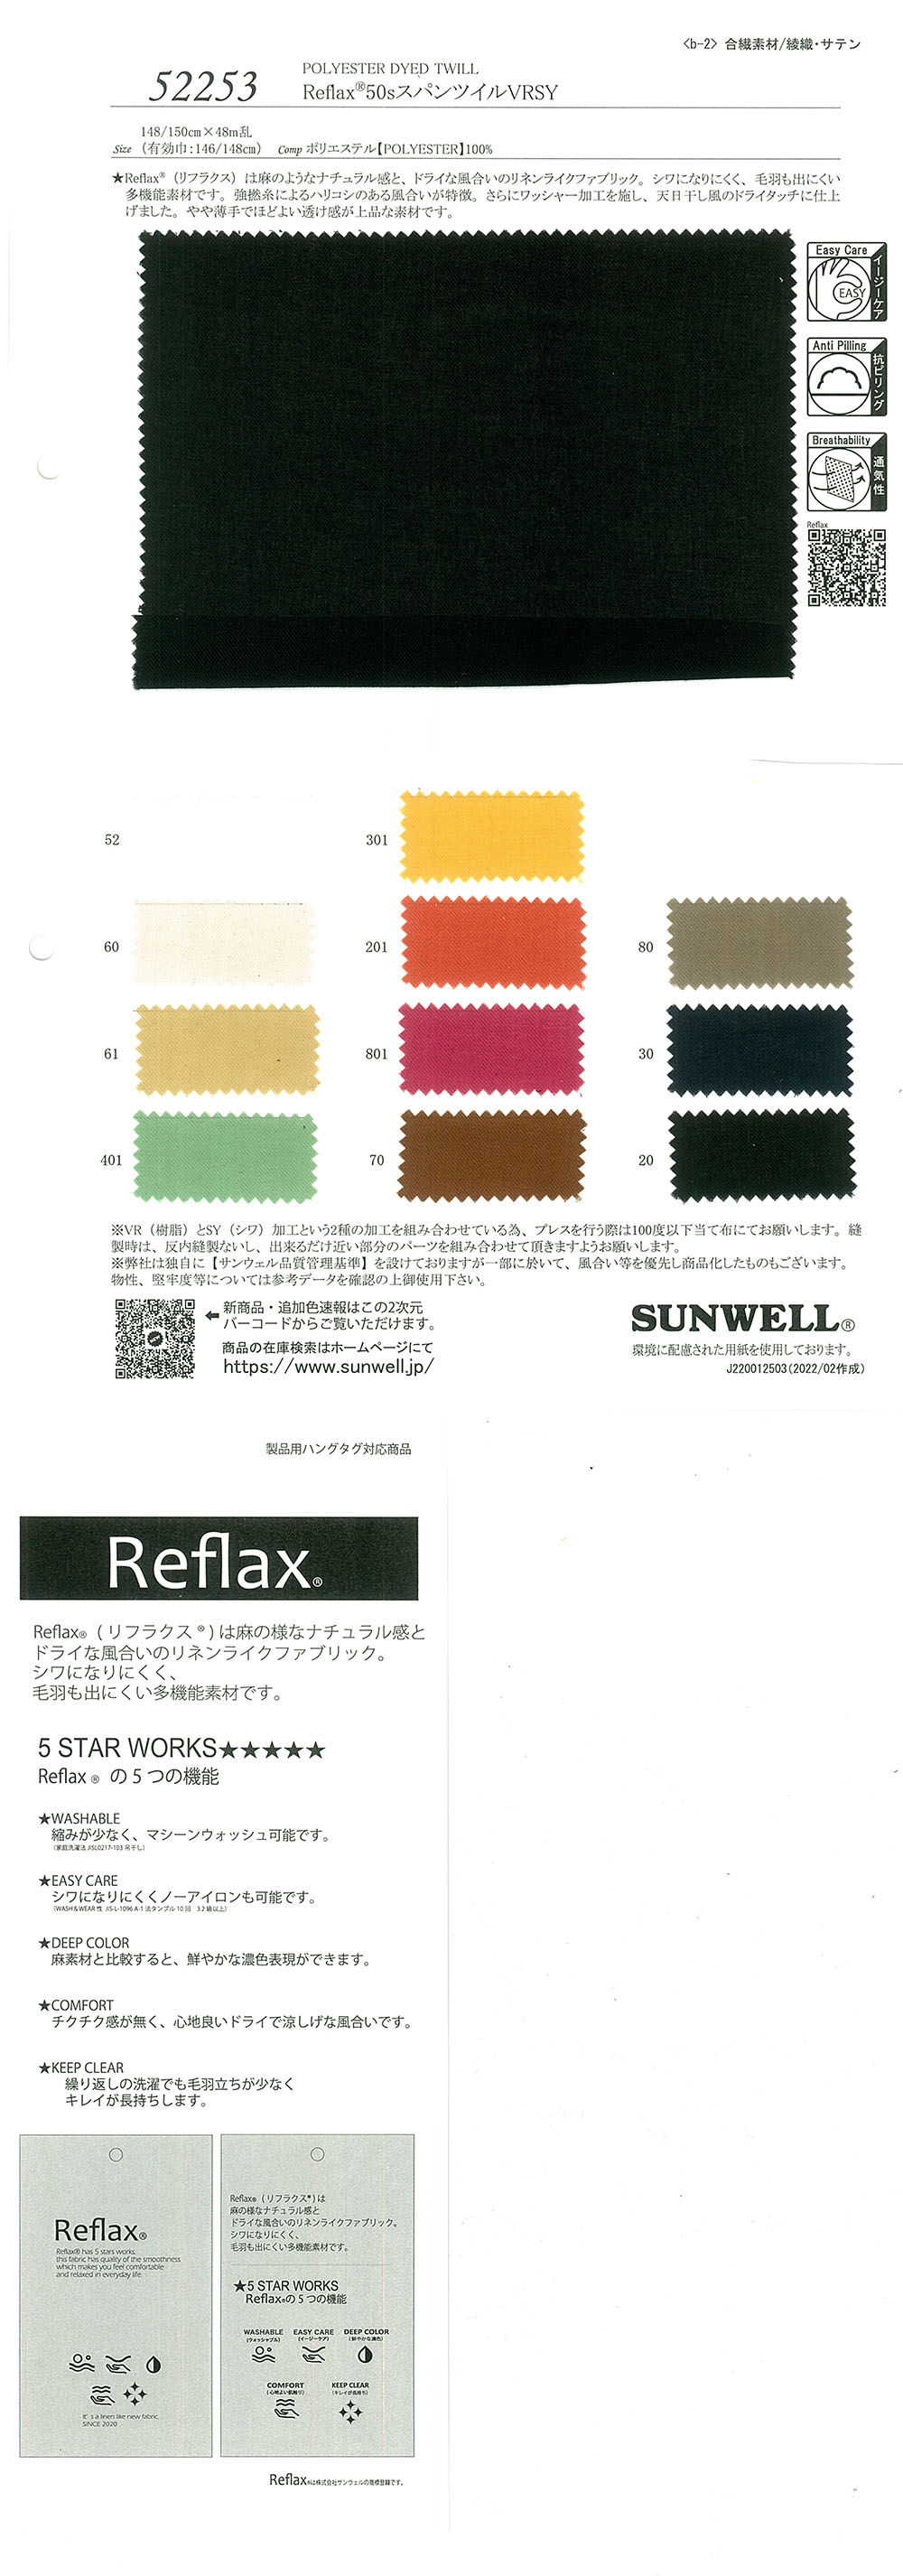 52253 Reflax(R)50 Single Yarn Spun Tile Thread[Textile / Fabric] SUNWELL